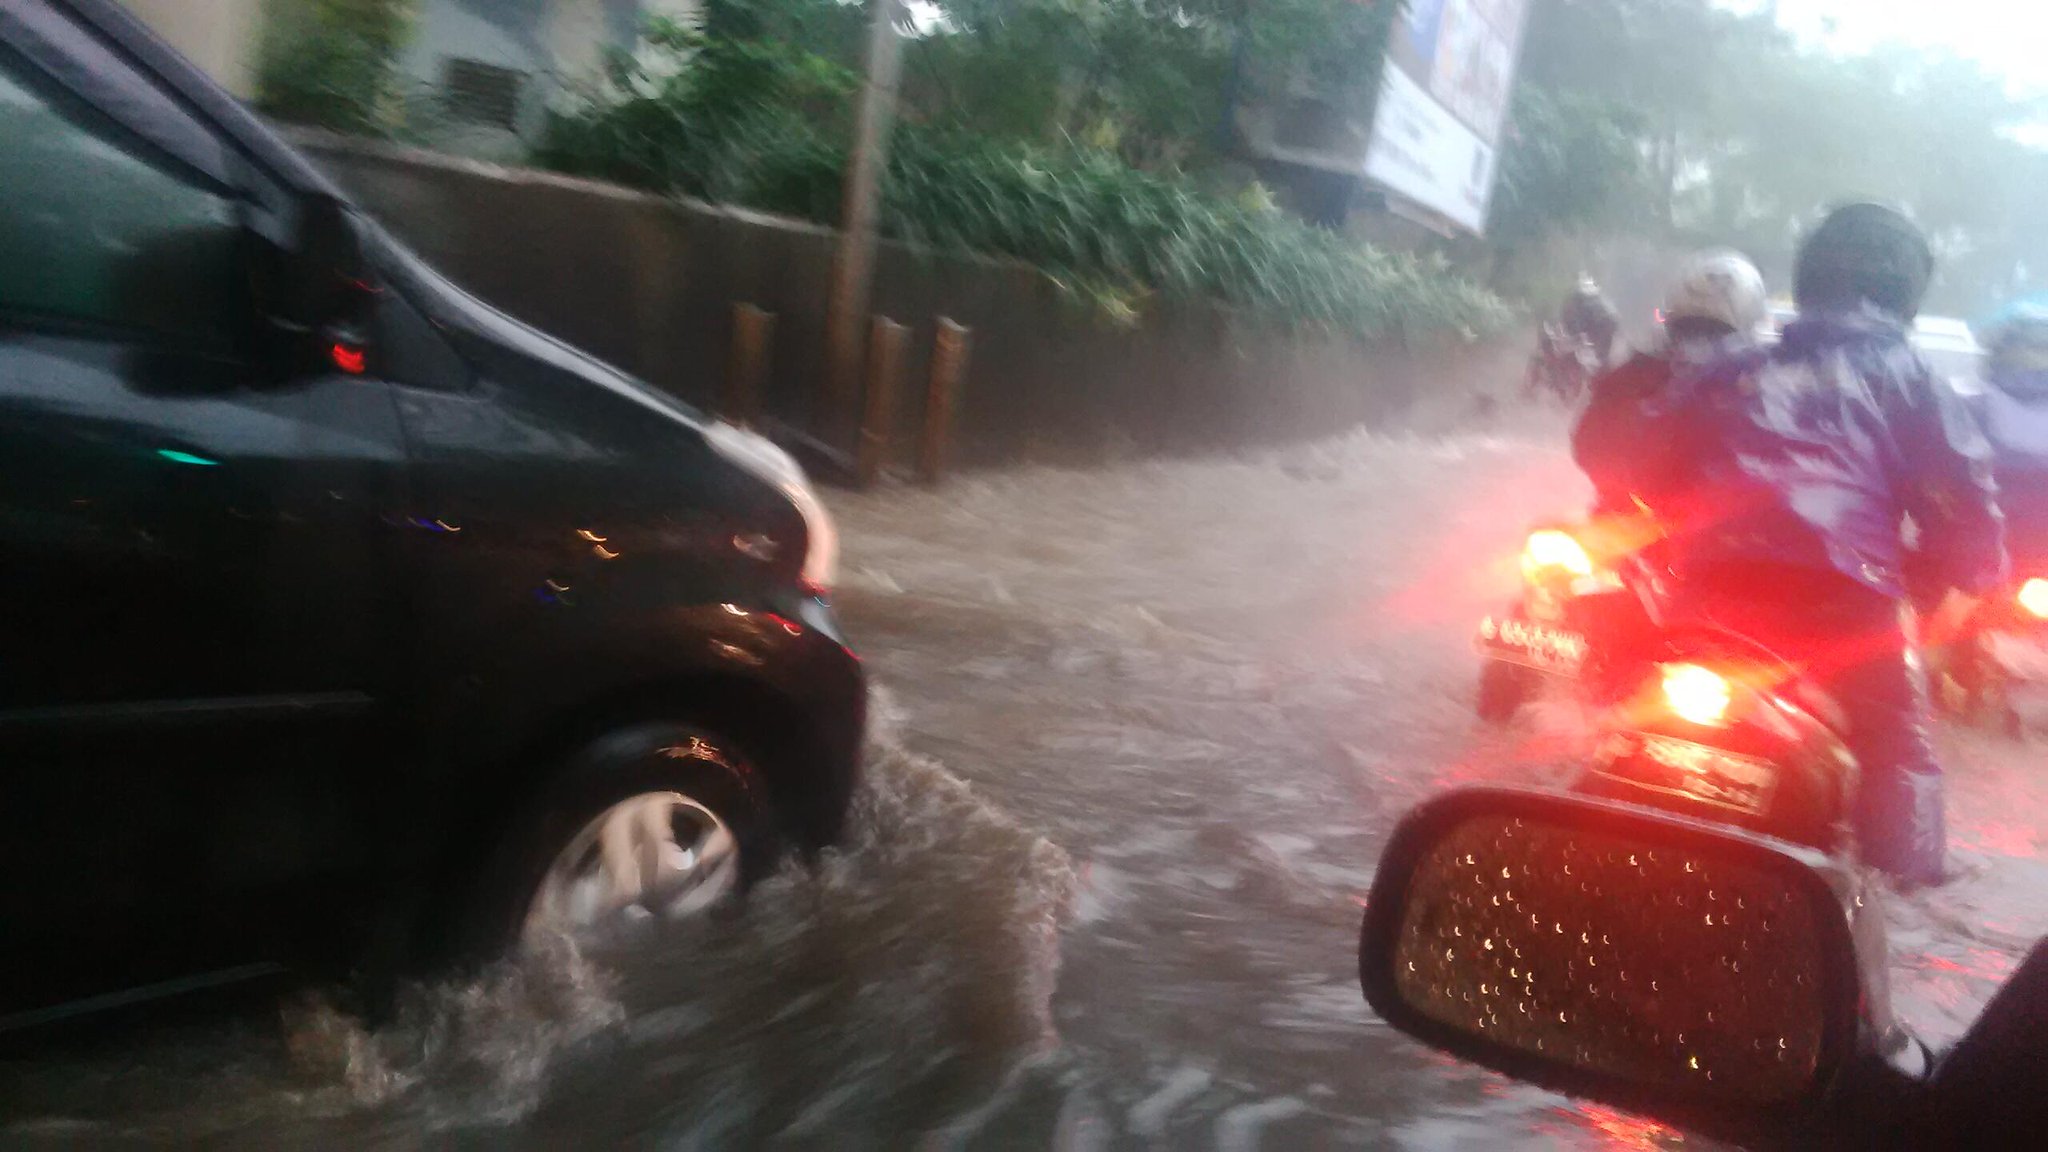 &#91;Orangnya Lagi Umroh&#93; 7 Juli 2014, Jakarta Dikepung Banjir Dan Macet Parah